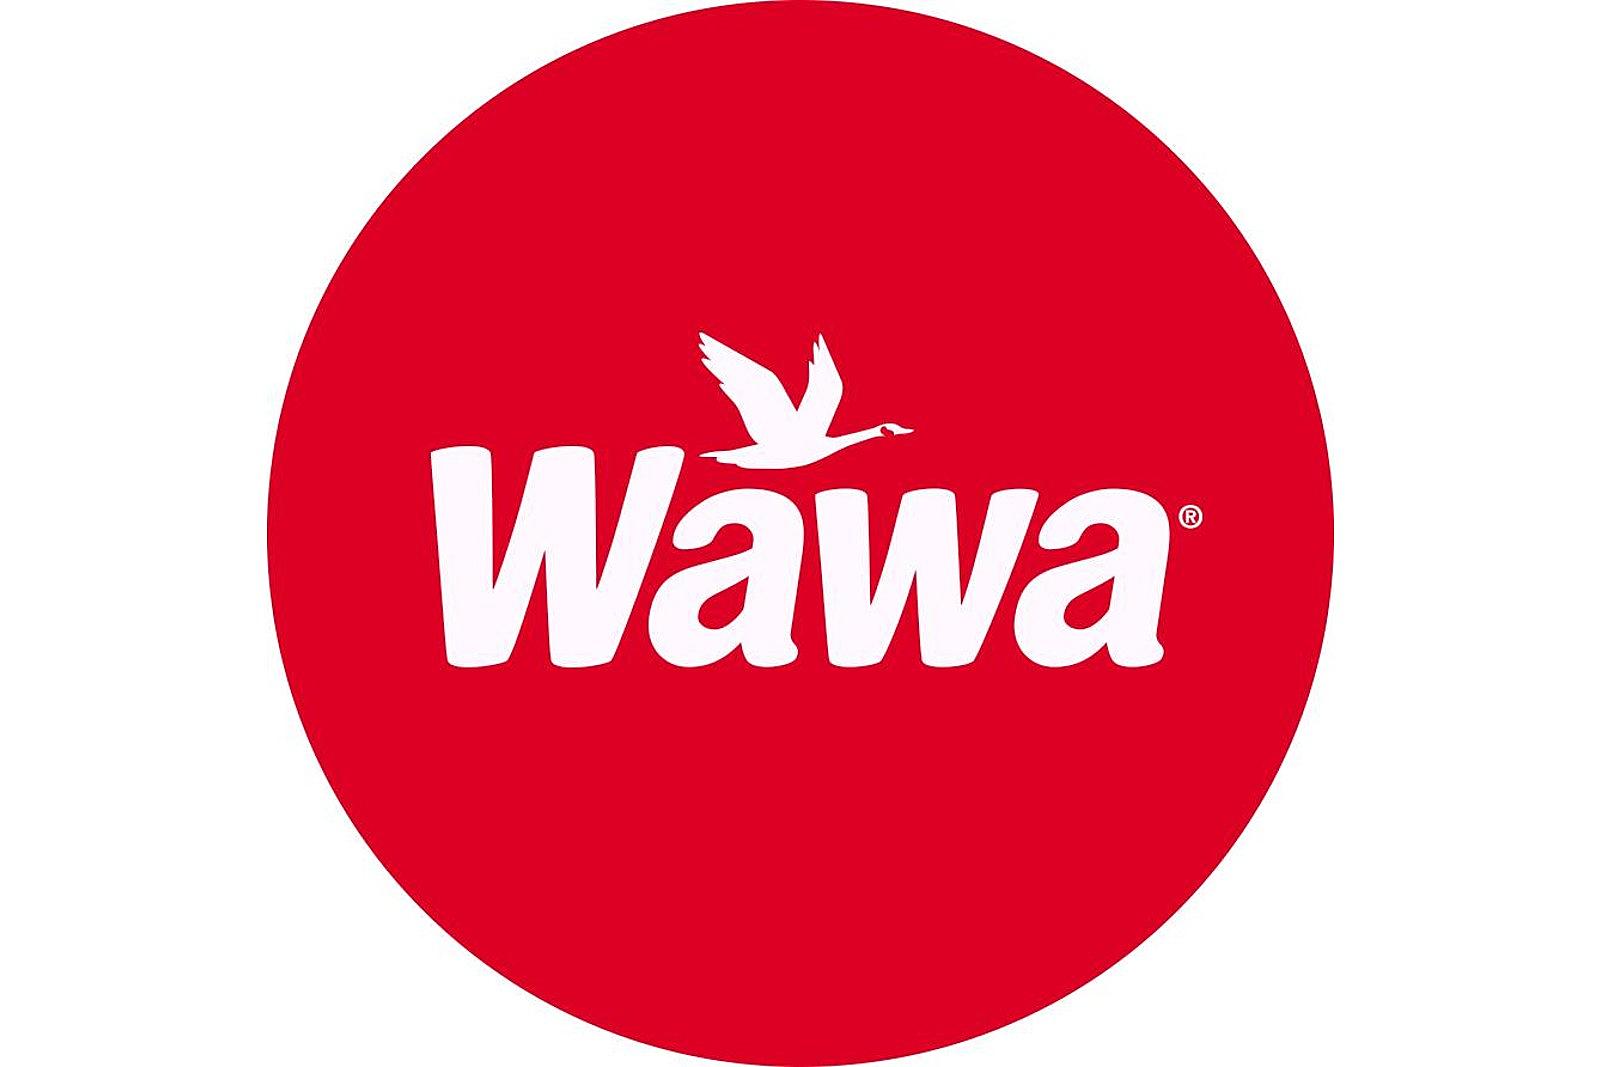 Wawa Pizza Reviews Show People Really Hate Wawa Pizza